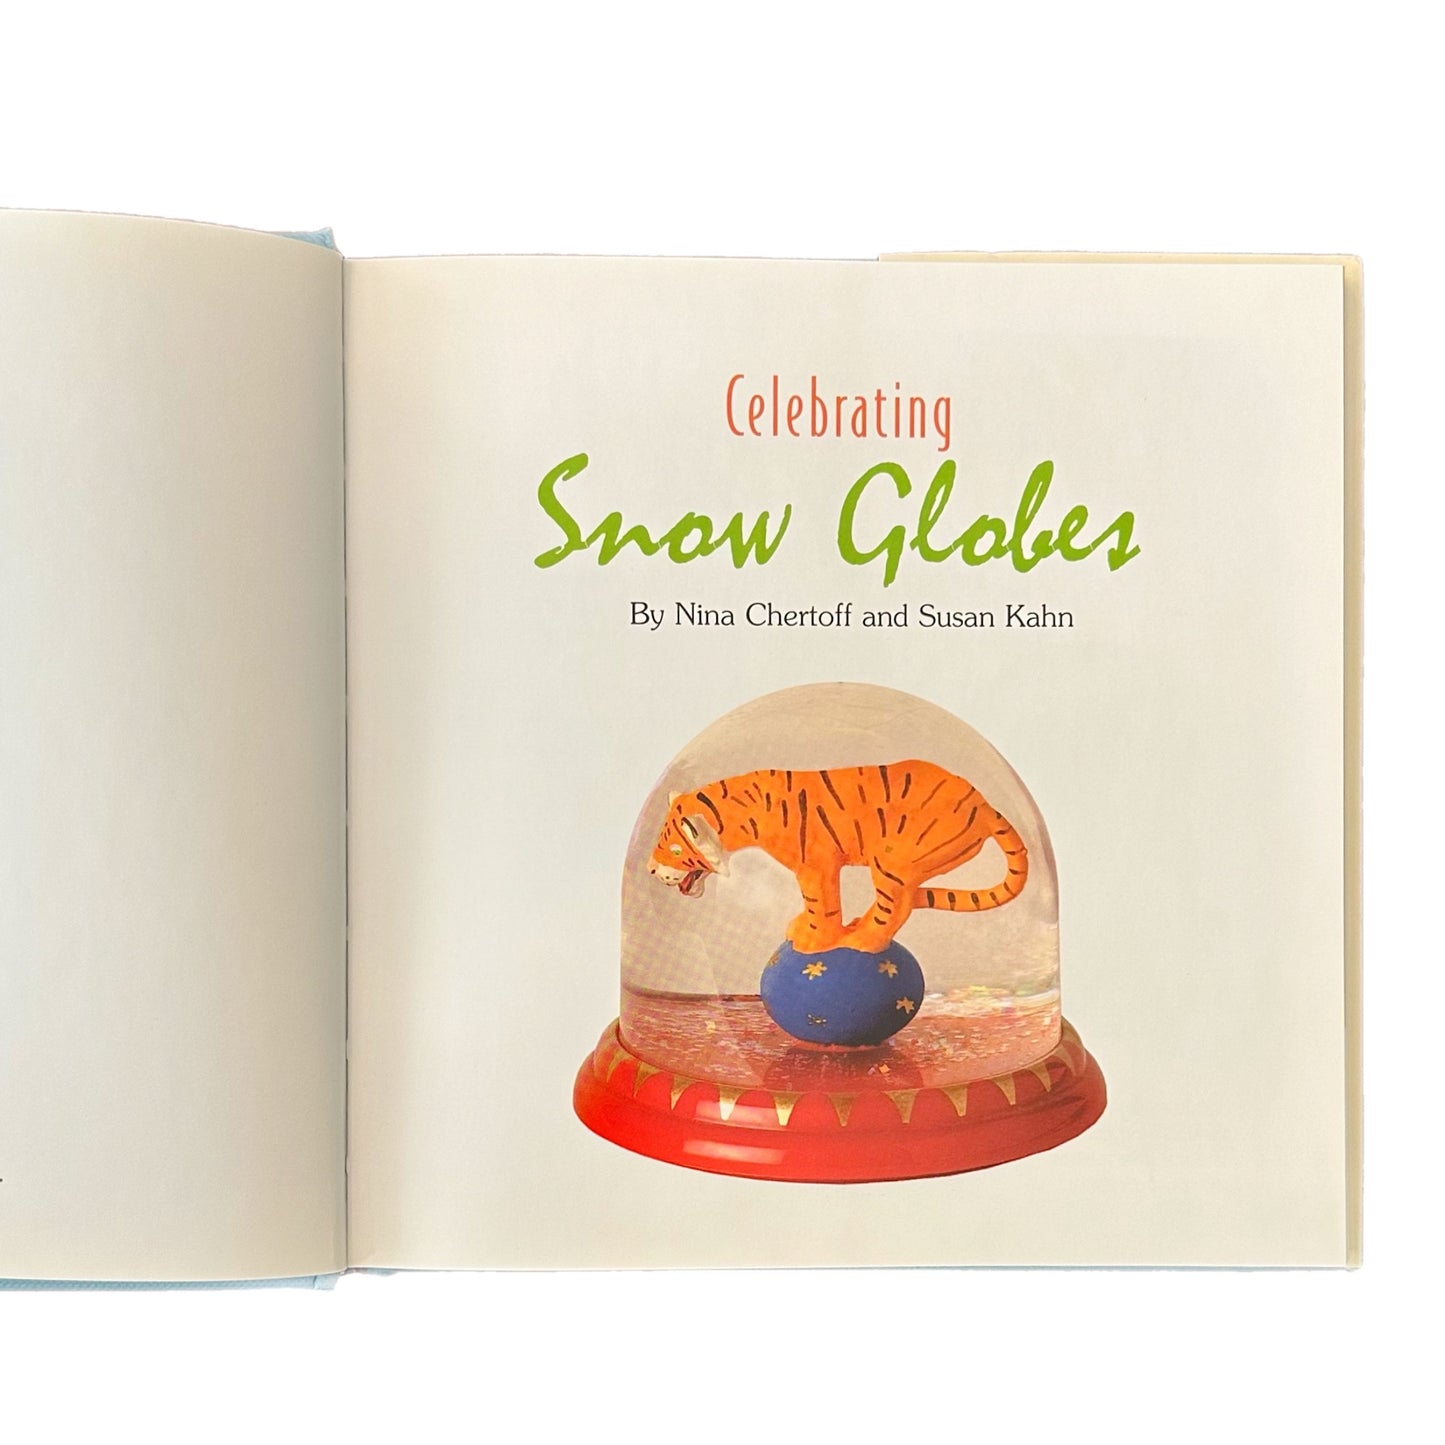 CELEBRATING SNOW GLOBES (2006) by Nina Chertoff & Susan Kahn